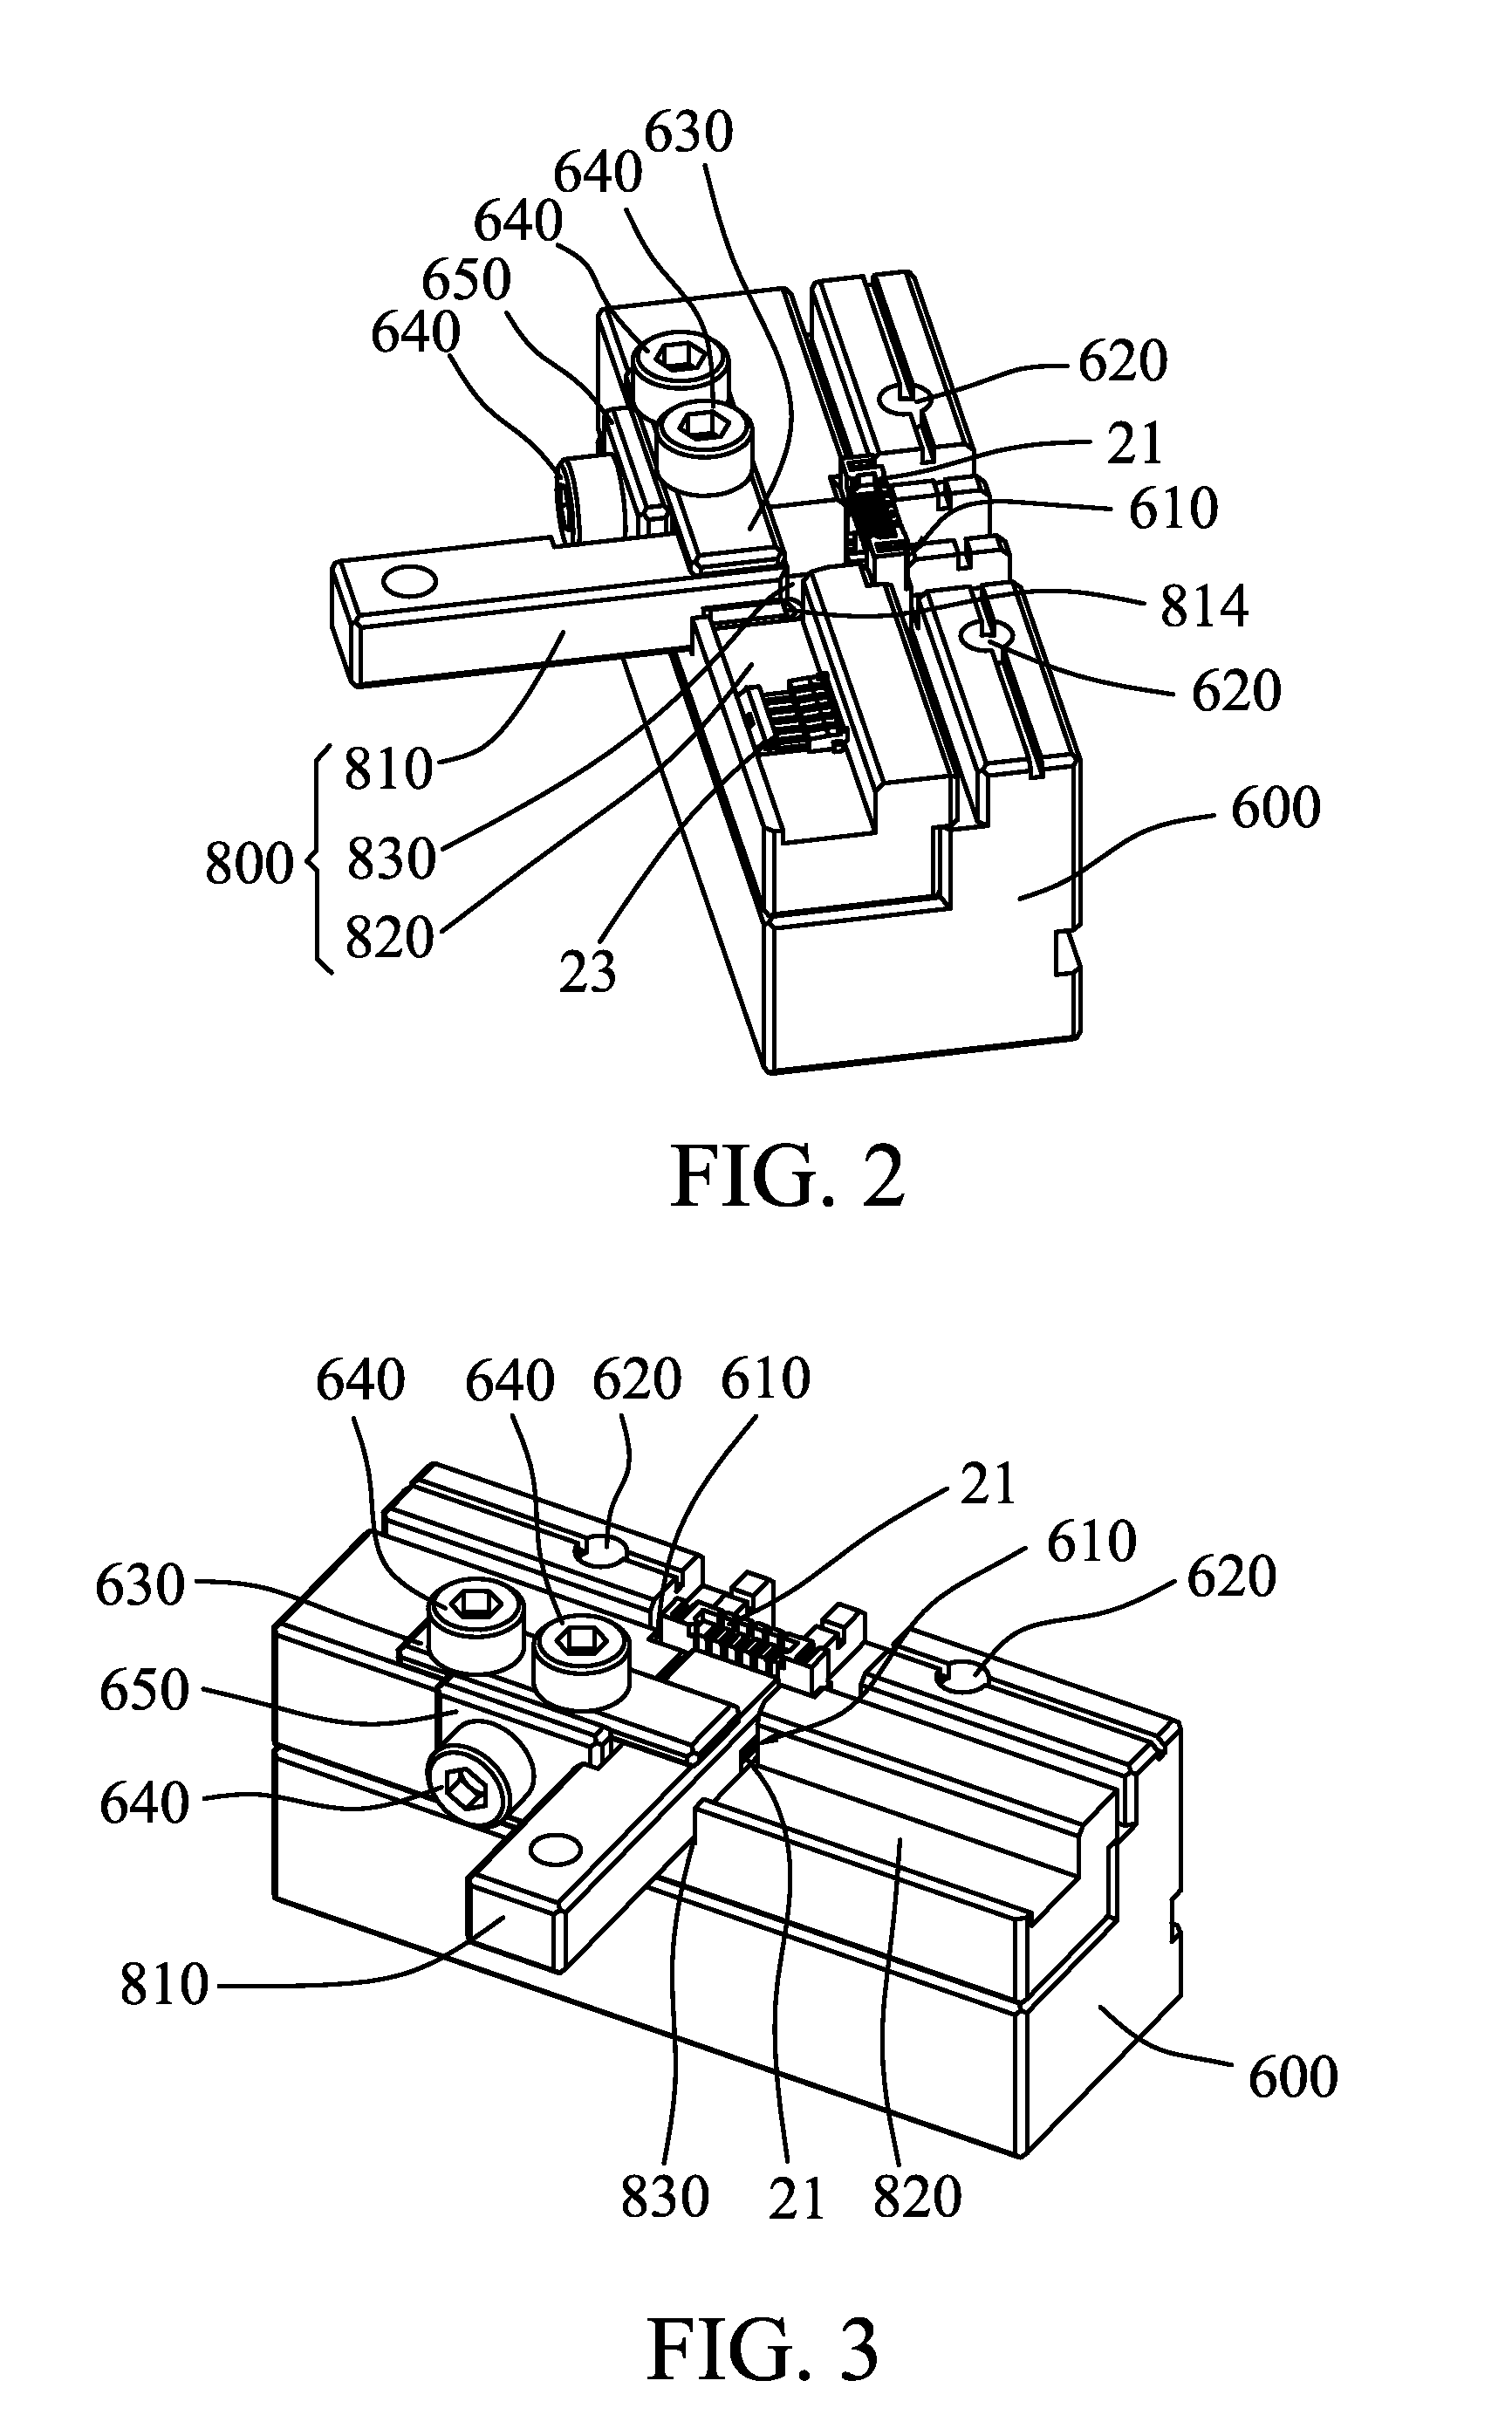 Flexible printed circuit connector assembling fixture